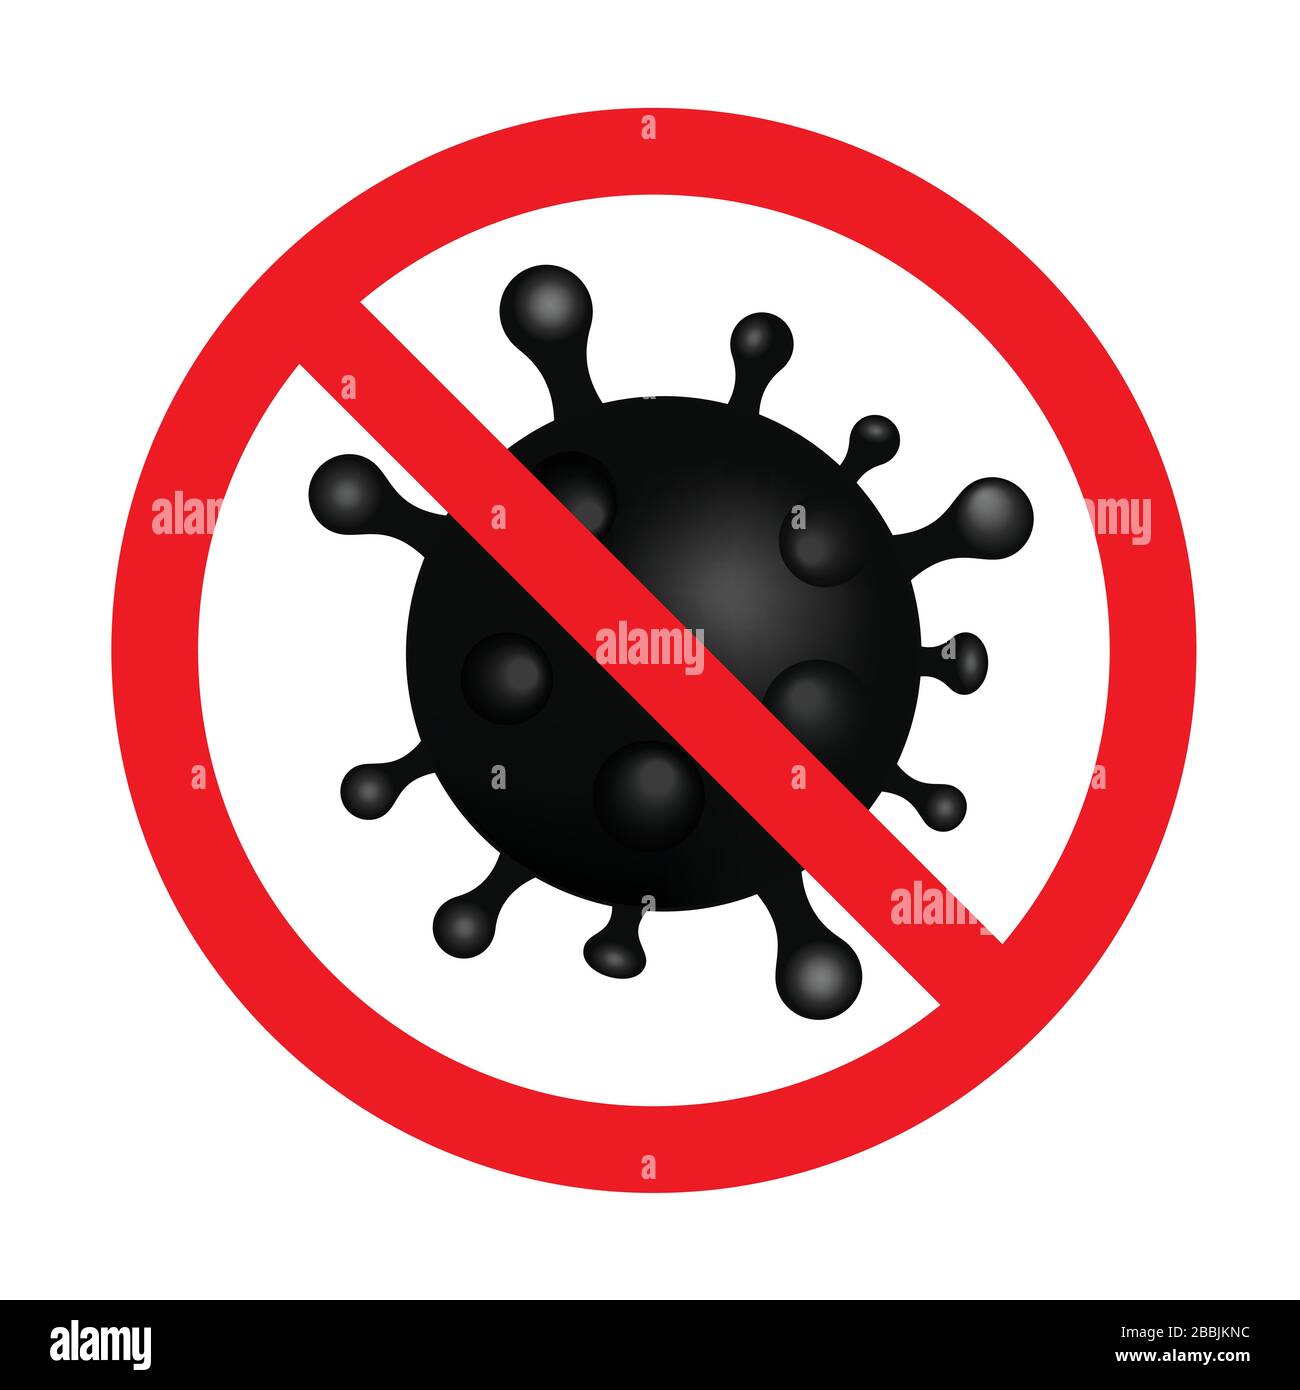 Stop Coronavirus COVID-19 signe & symbole, illustration simple Coronavirus COVID-19. Nouvelle éclosion de coronavirus dans le monde. Infographie vectorielle. Illustration de Vecteur